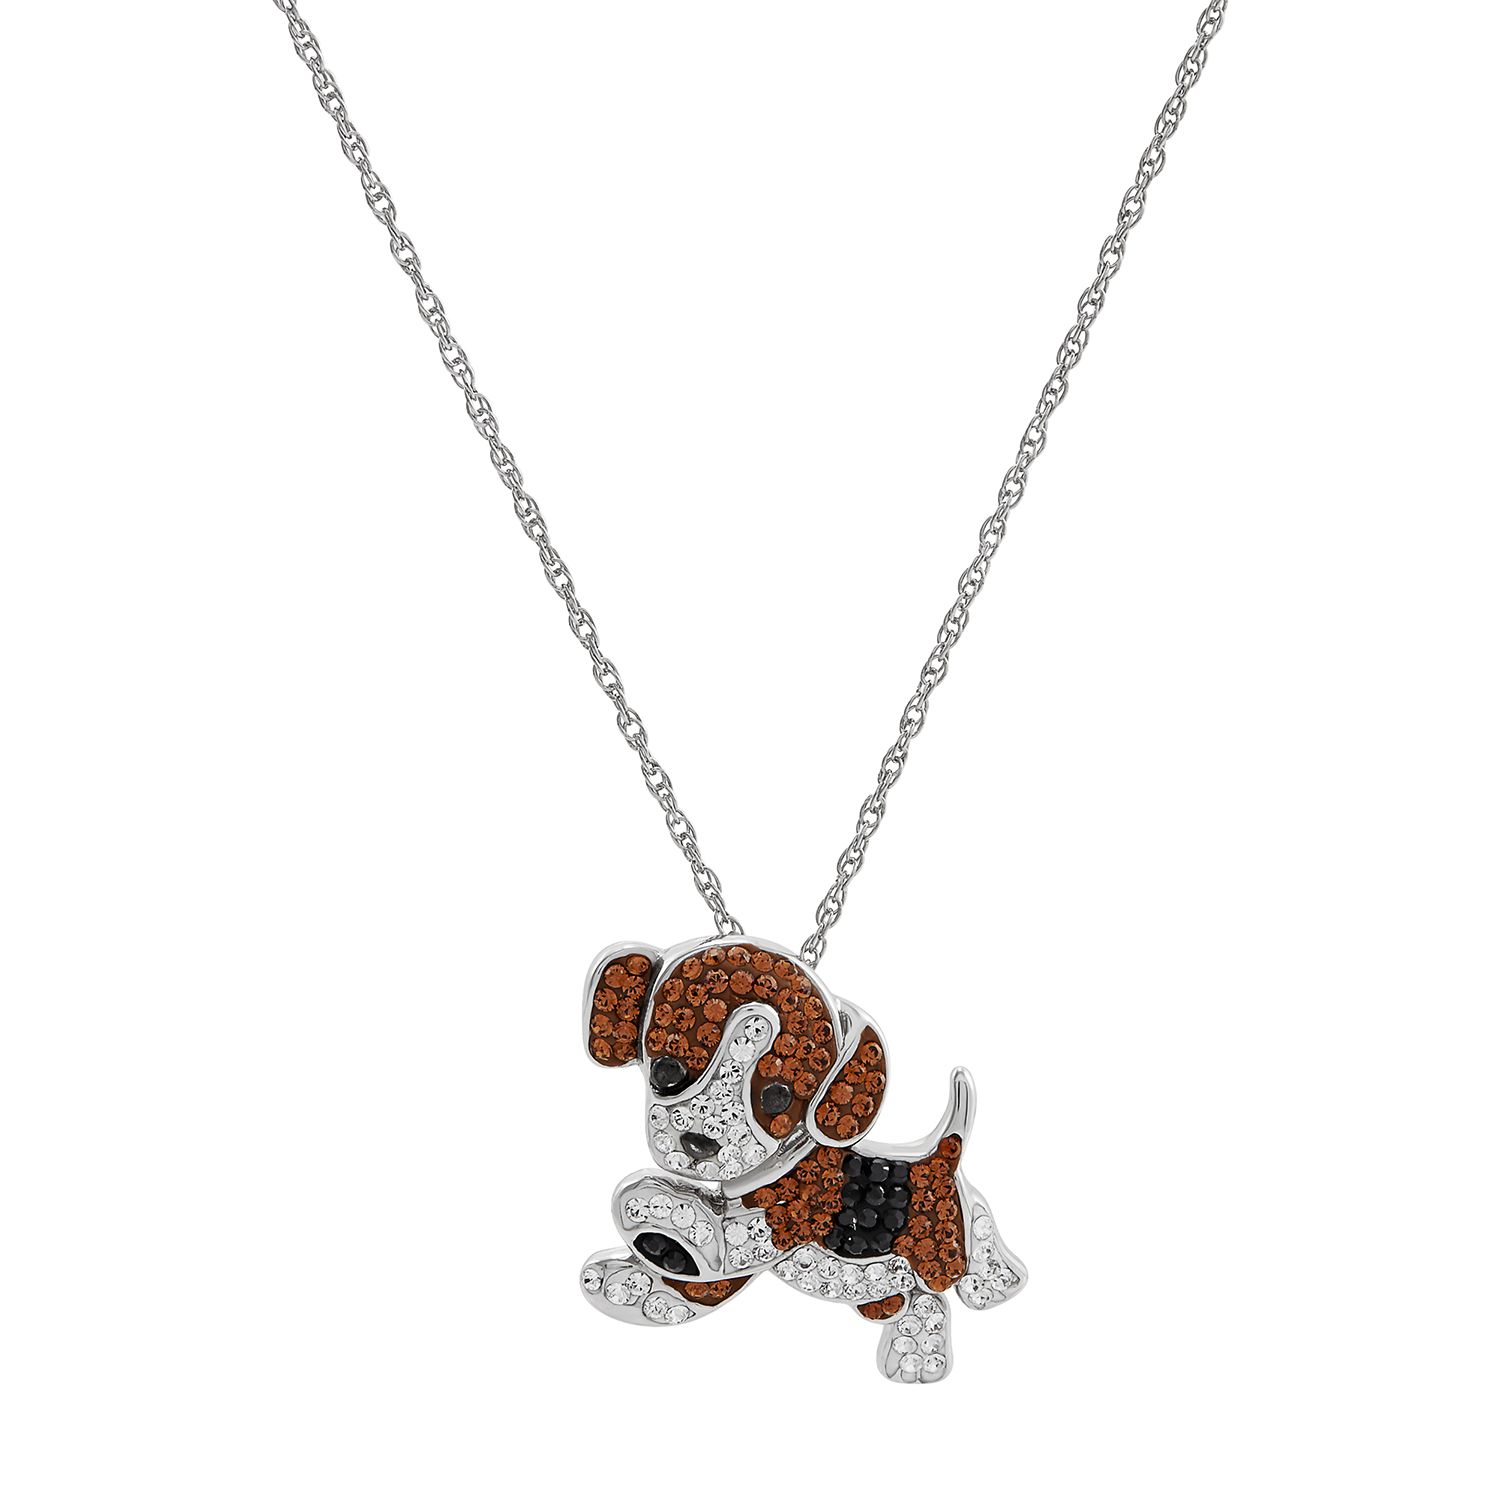 puppy pendant